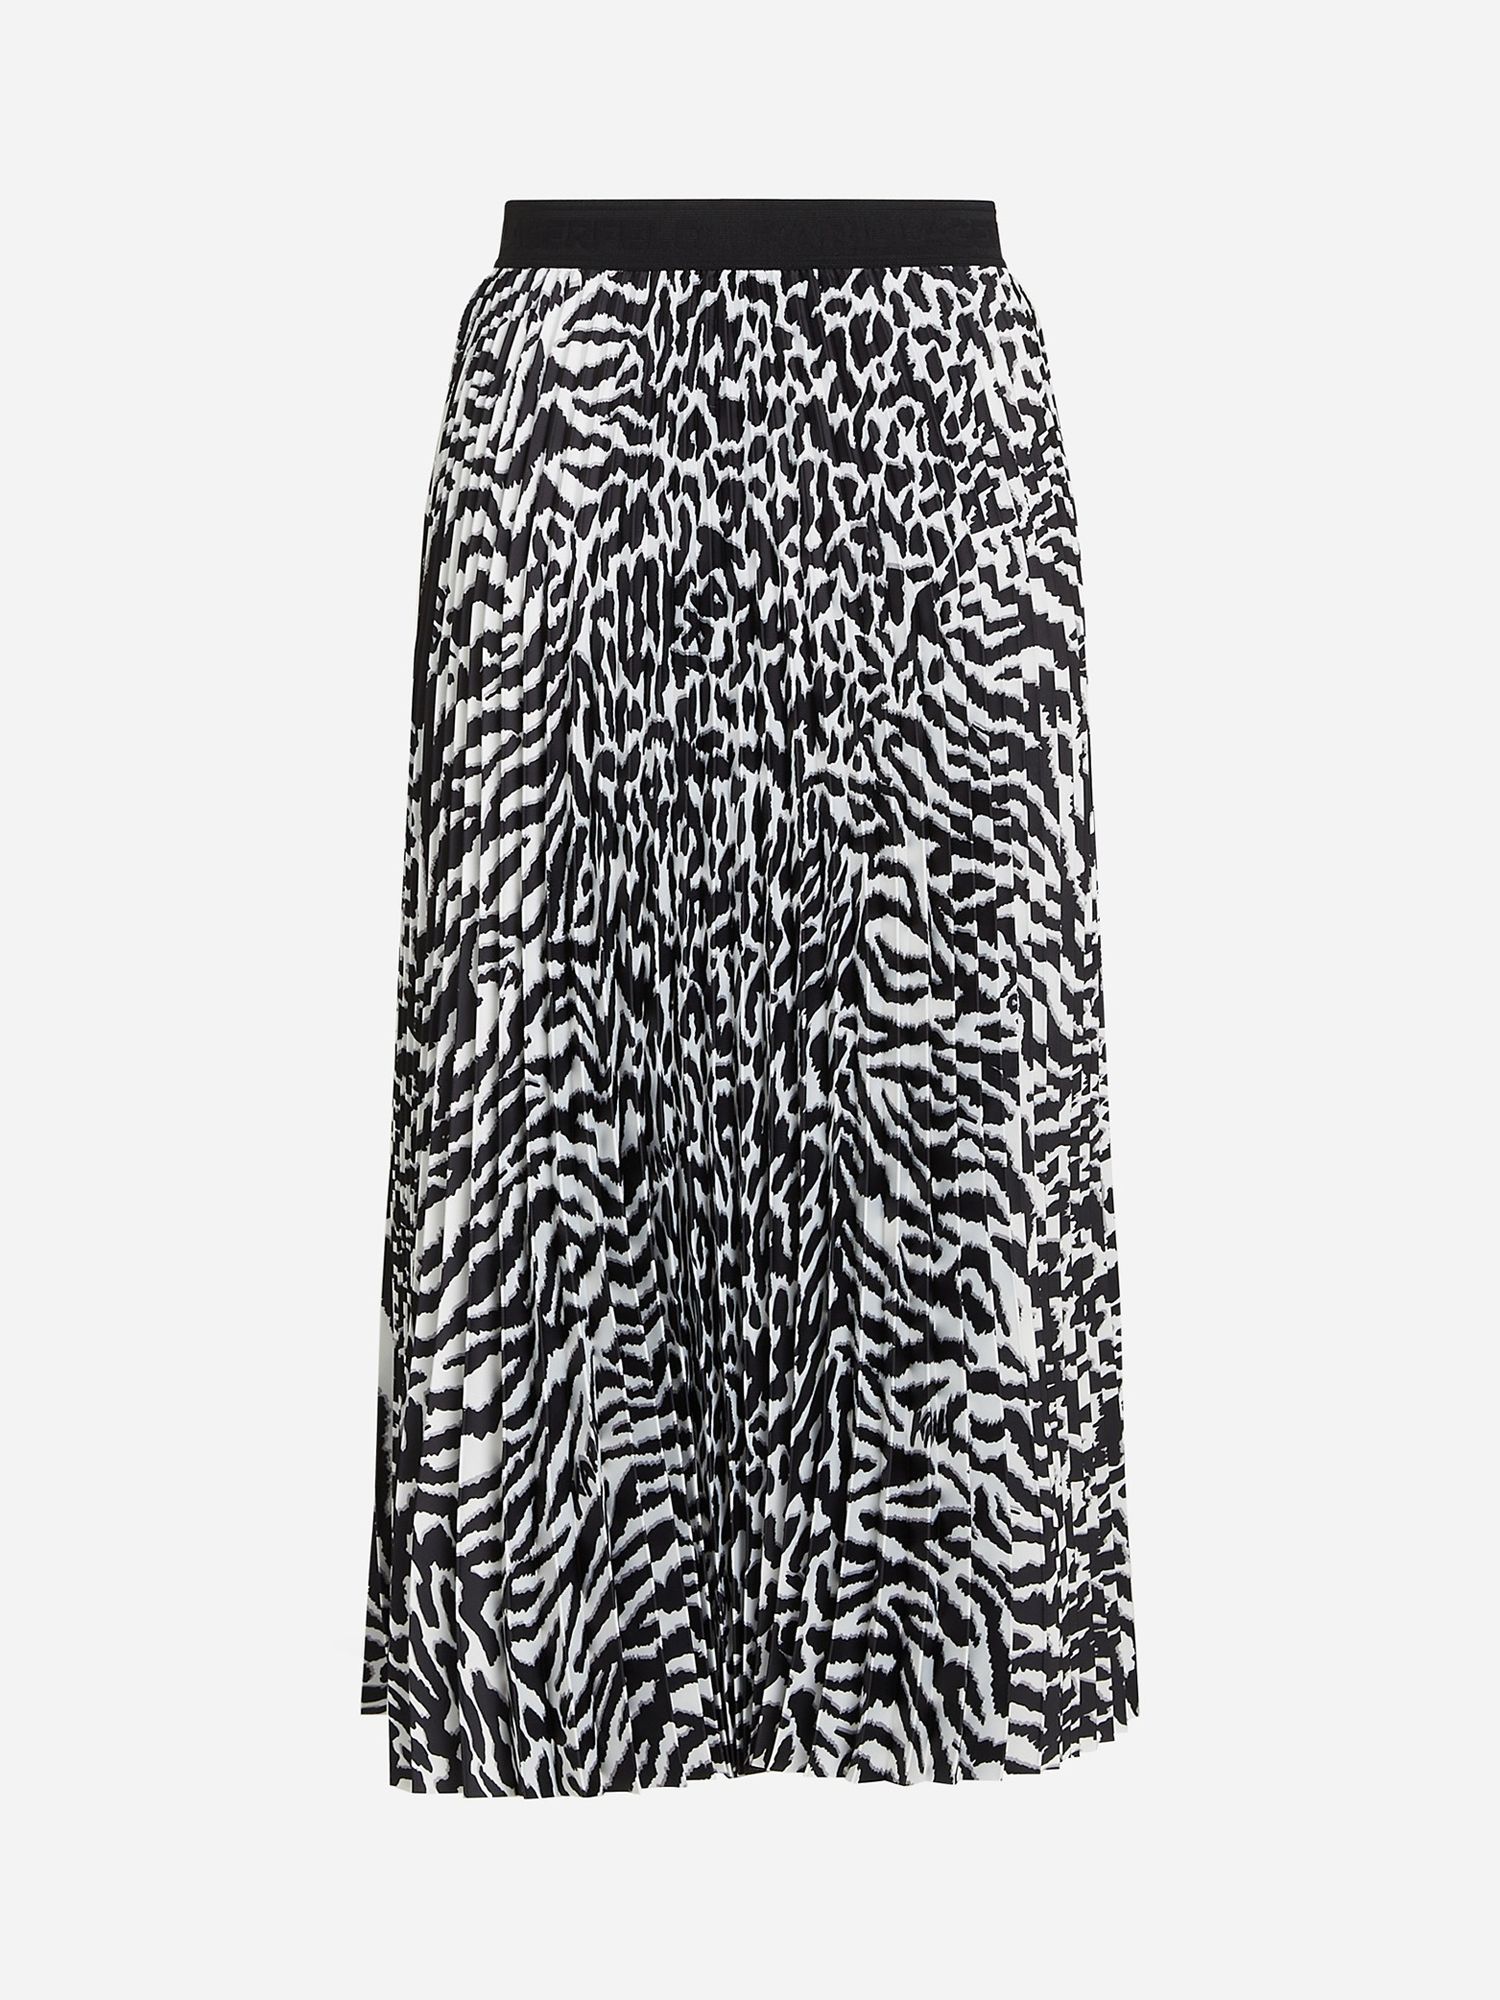 Buy KARL LAGERFELD Animal Print Pleated Midi Skirt, Black/White Online at johnlewis.com